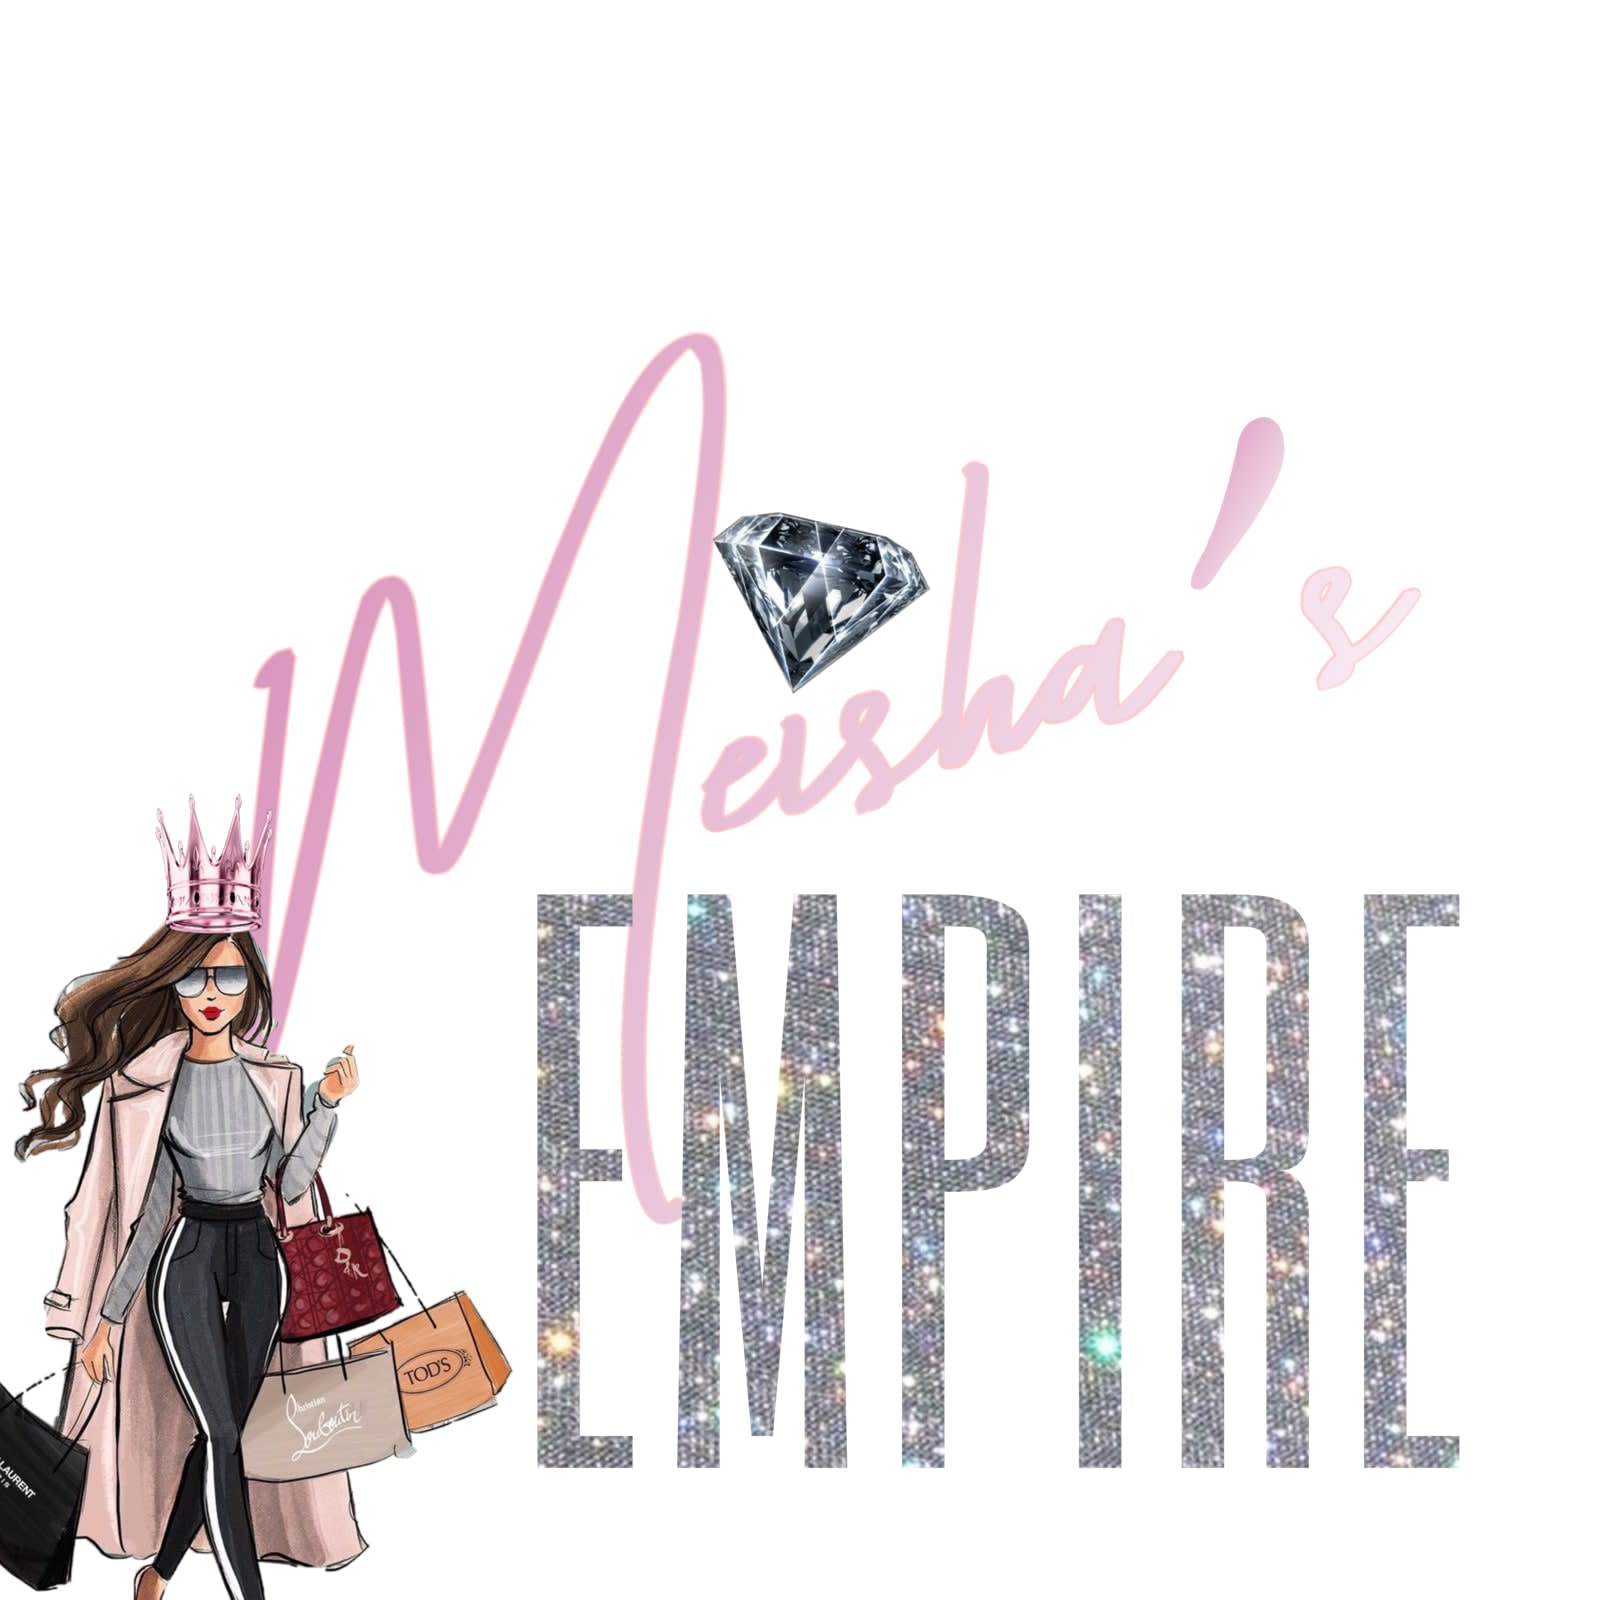 Meisha's Empire